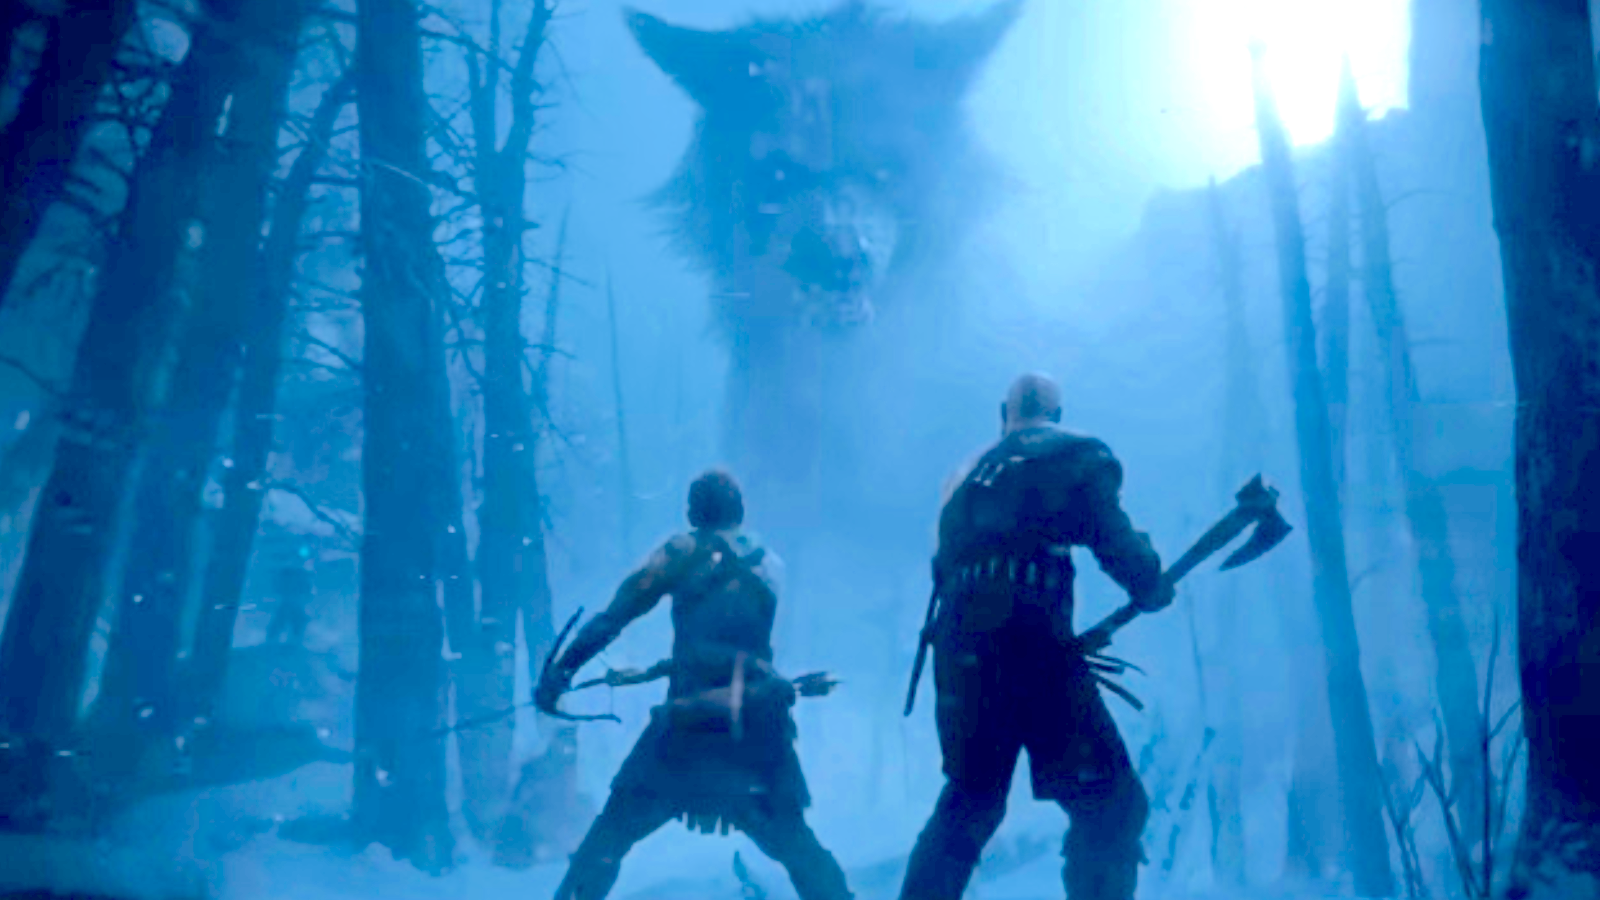 God of War: Ragnarok is getting a digital series